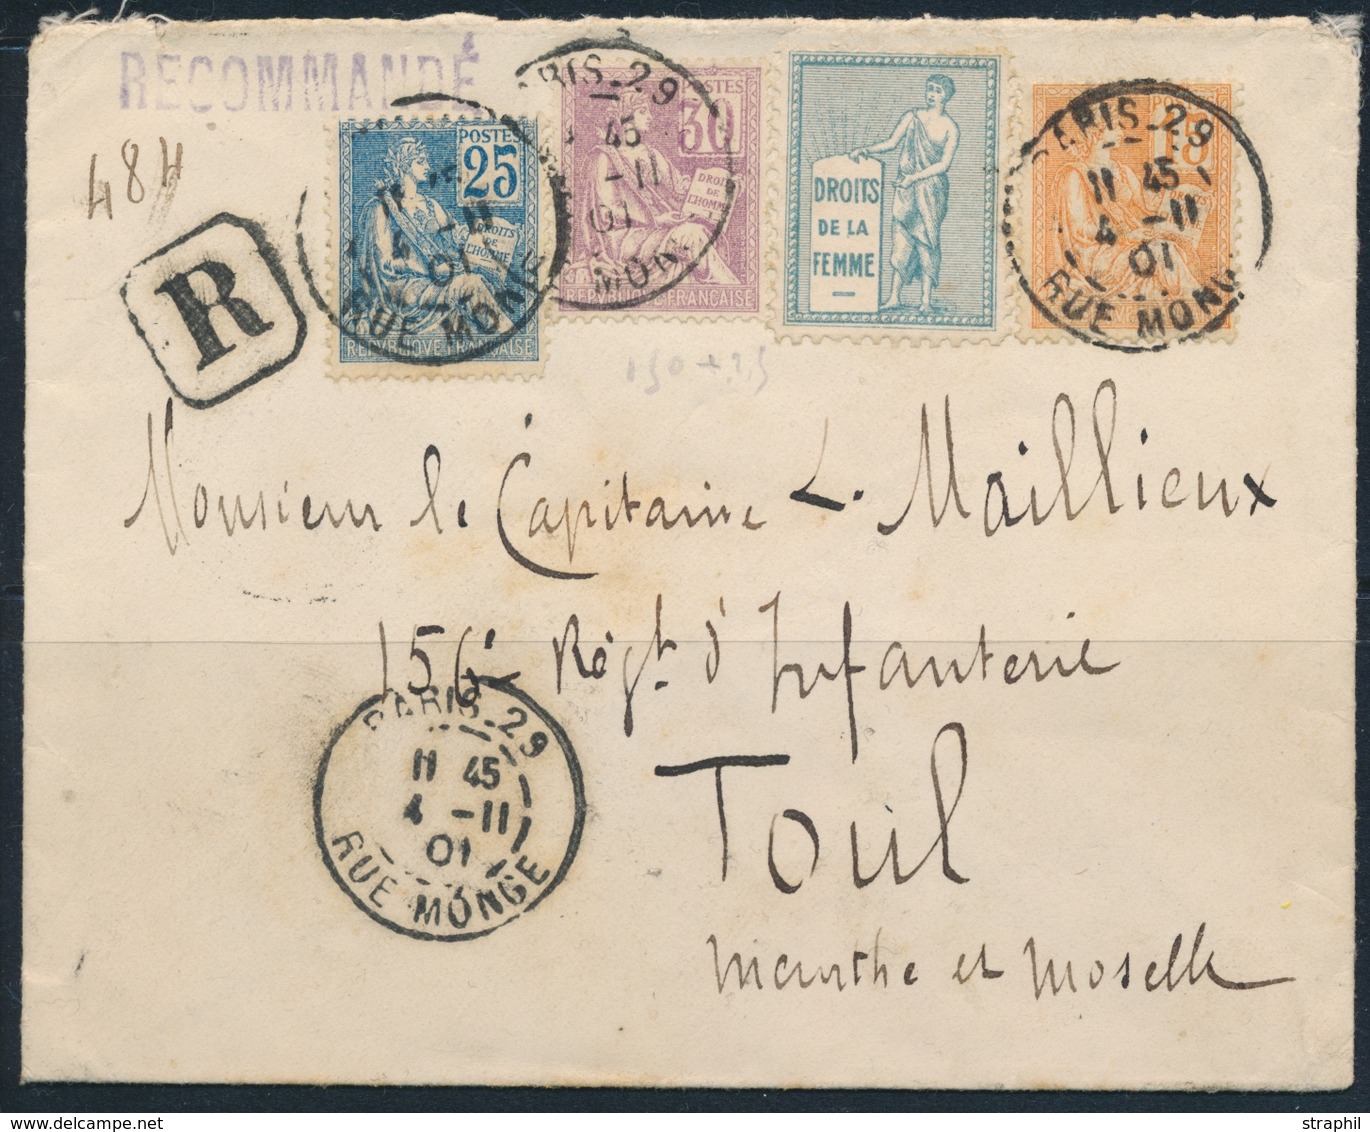 L VARIETES  - L - N°115a (Chiffres Déplacés) + N°117/18 + Vignette Droits De La Femme - Obl. PARIS - 4/11/1901 - S/L Rec - Ongebruikt